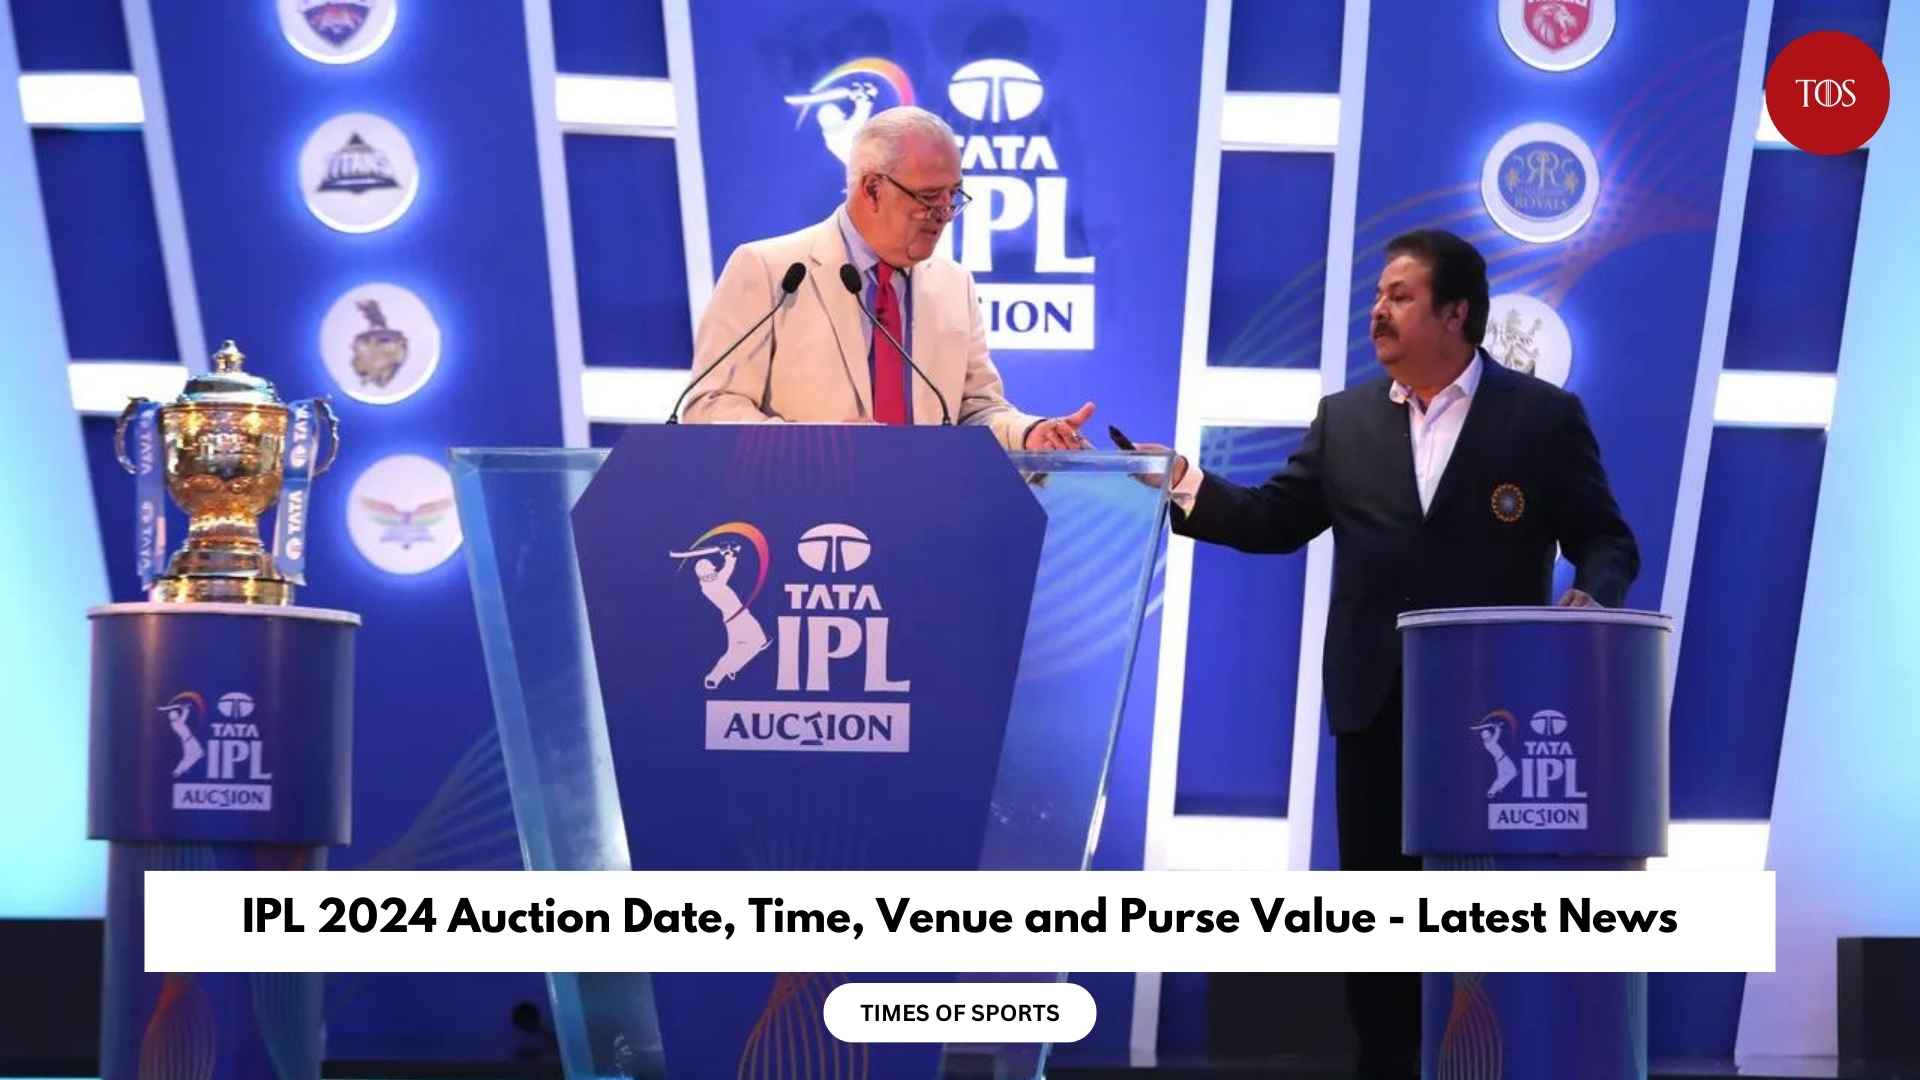 IPL 2021 auction - how the eight teams stack up ahead of IPL Season 14 |  ESPNcricinfo